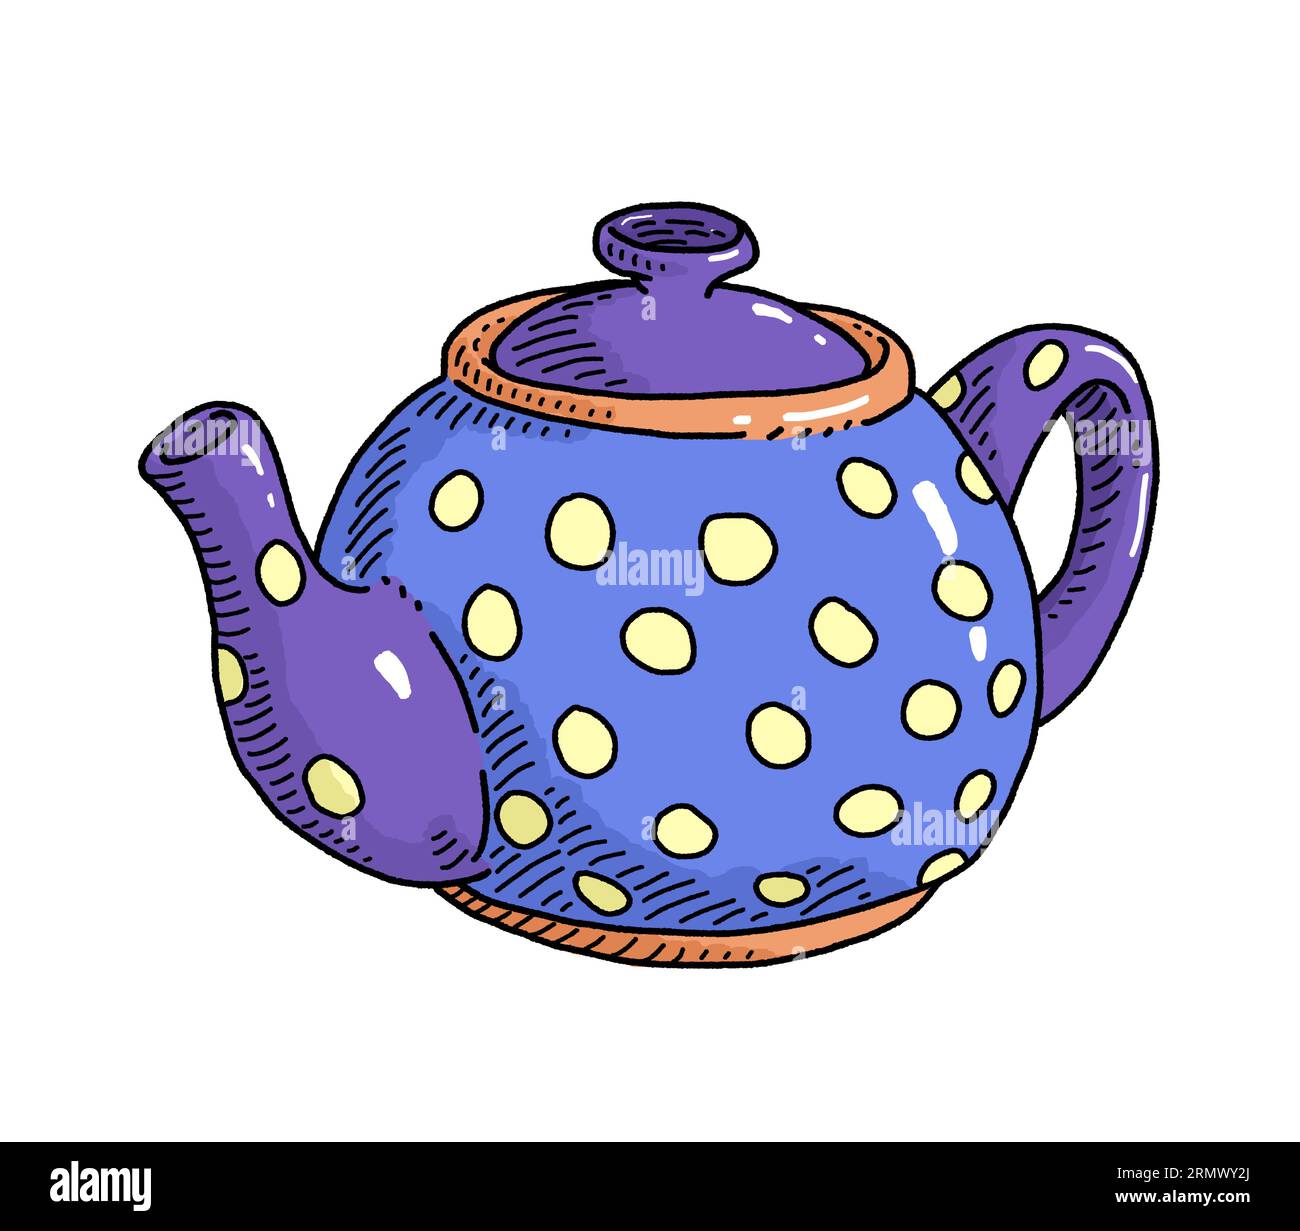 https://c8.alamy.com/comp/2RMWY2J/teapot-cartoon-doodle-art-isolated-on-white-background-transparent-image-2RMWY2J.jpg